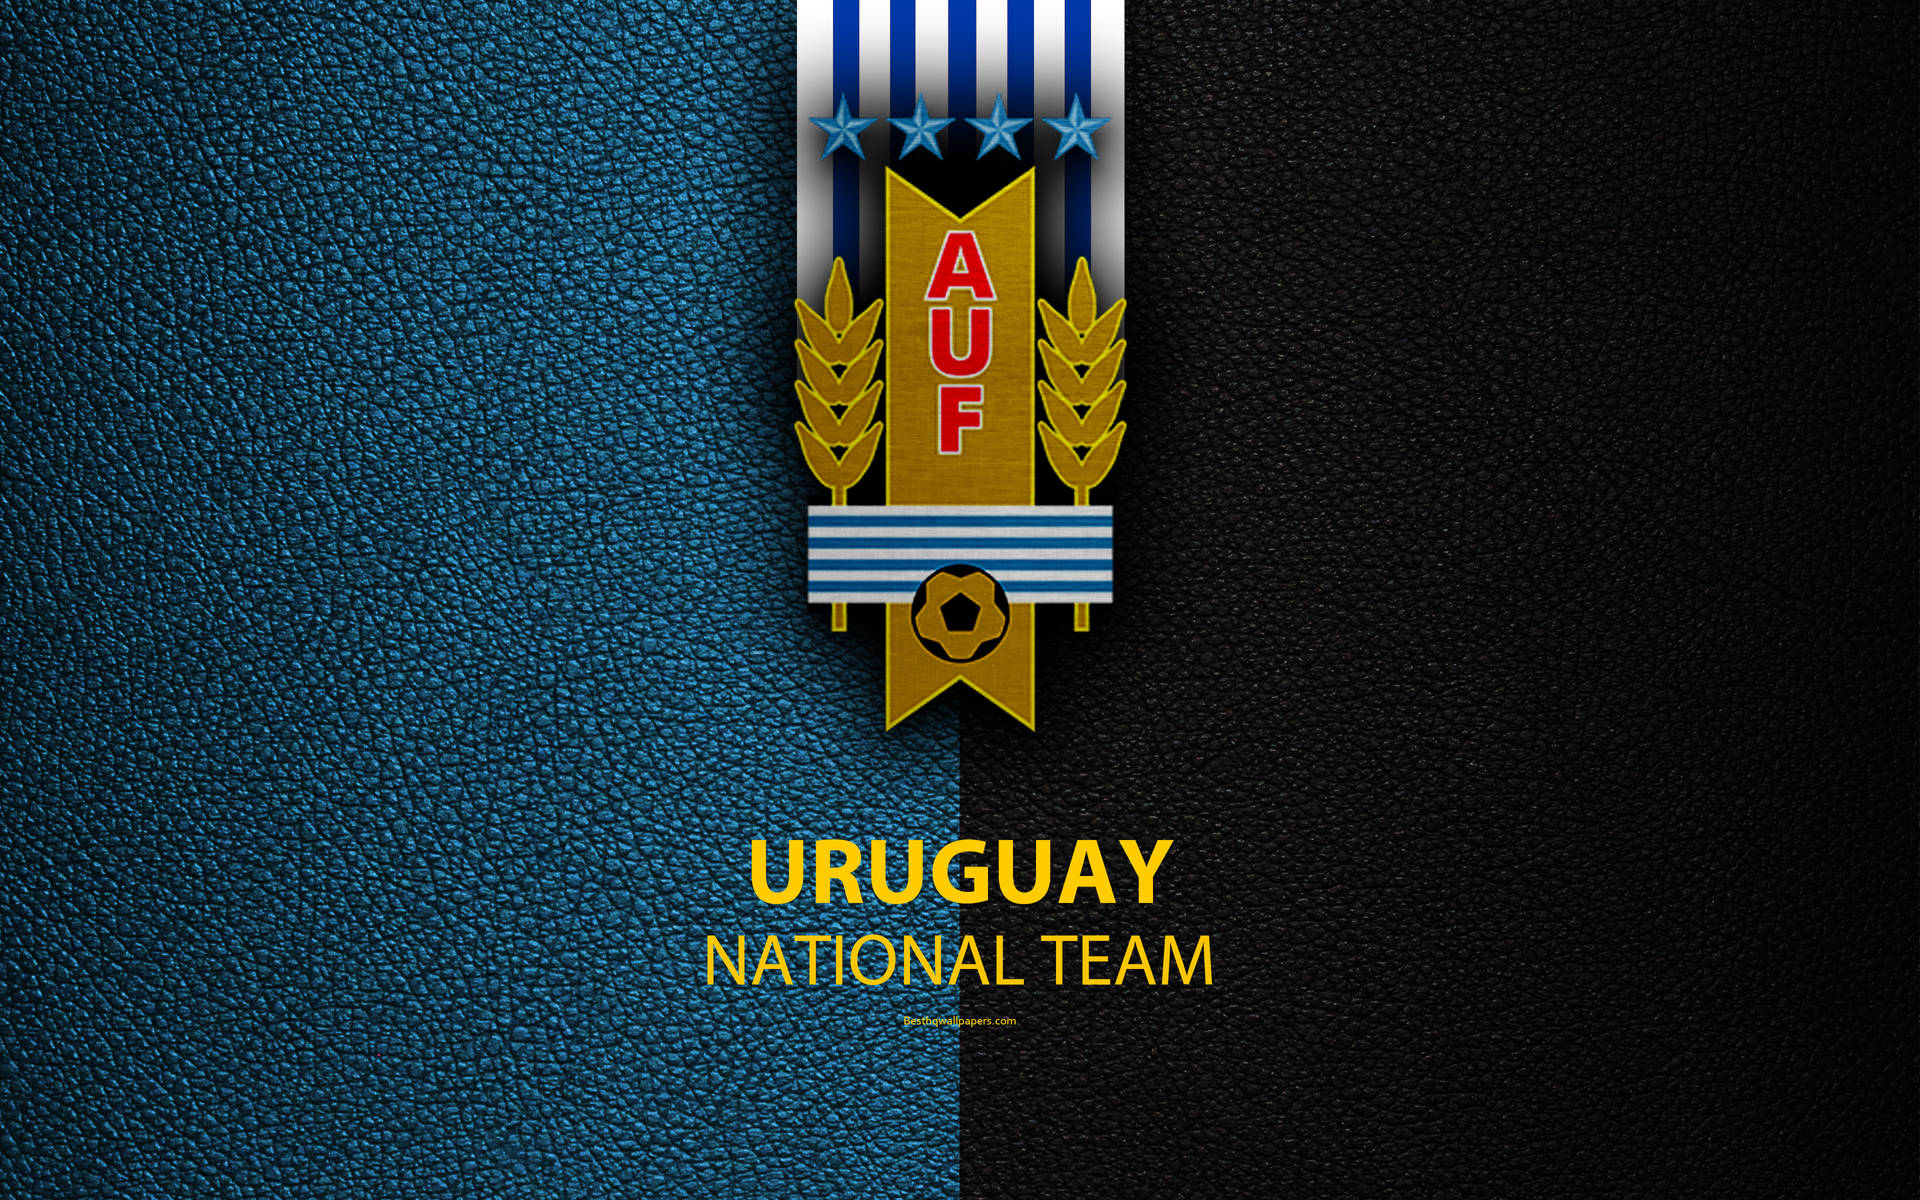 Uruguay National Team Football Logo Background